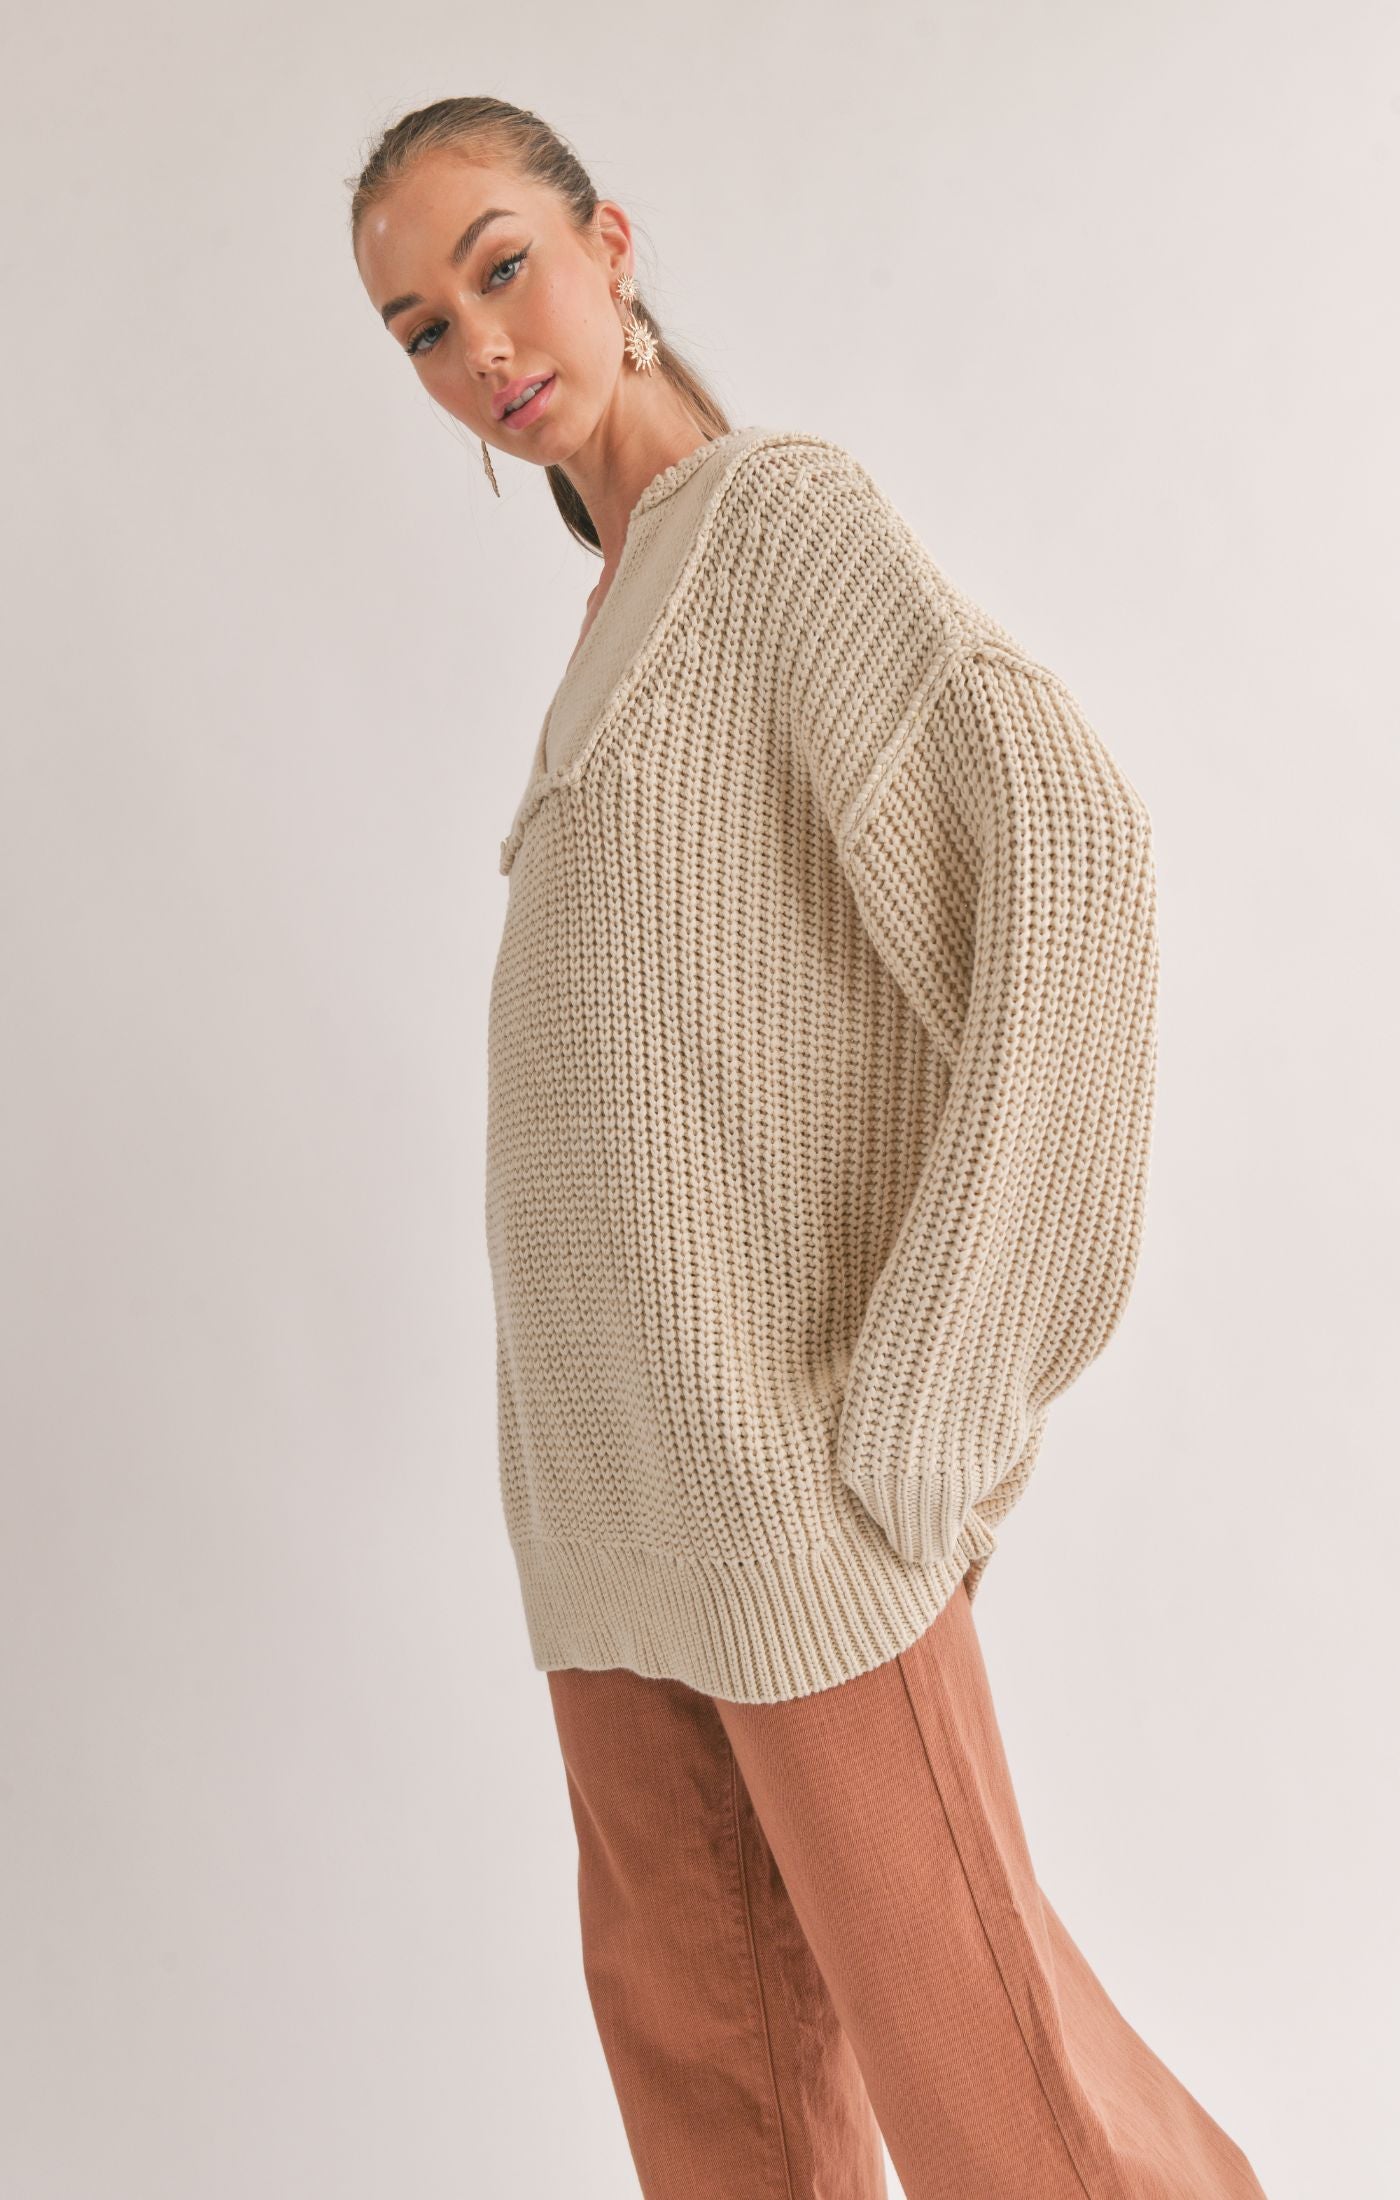 Sage The Label, Kaia Oversized Wear 2 Ways Sweater